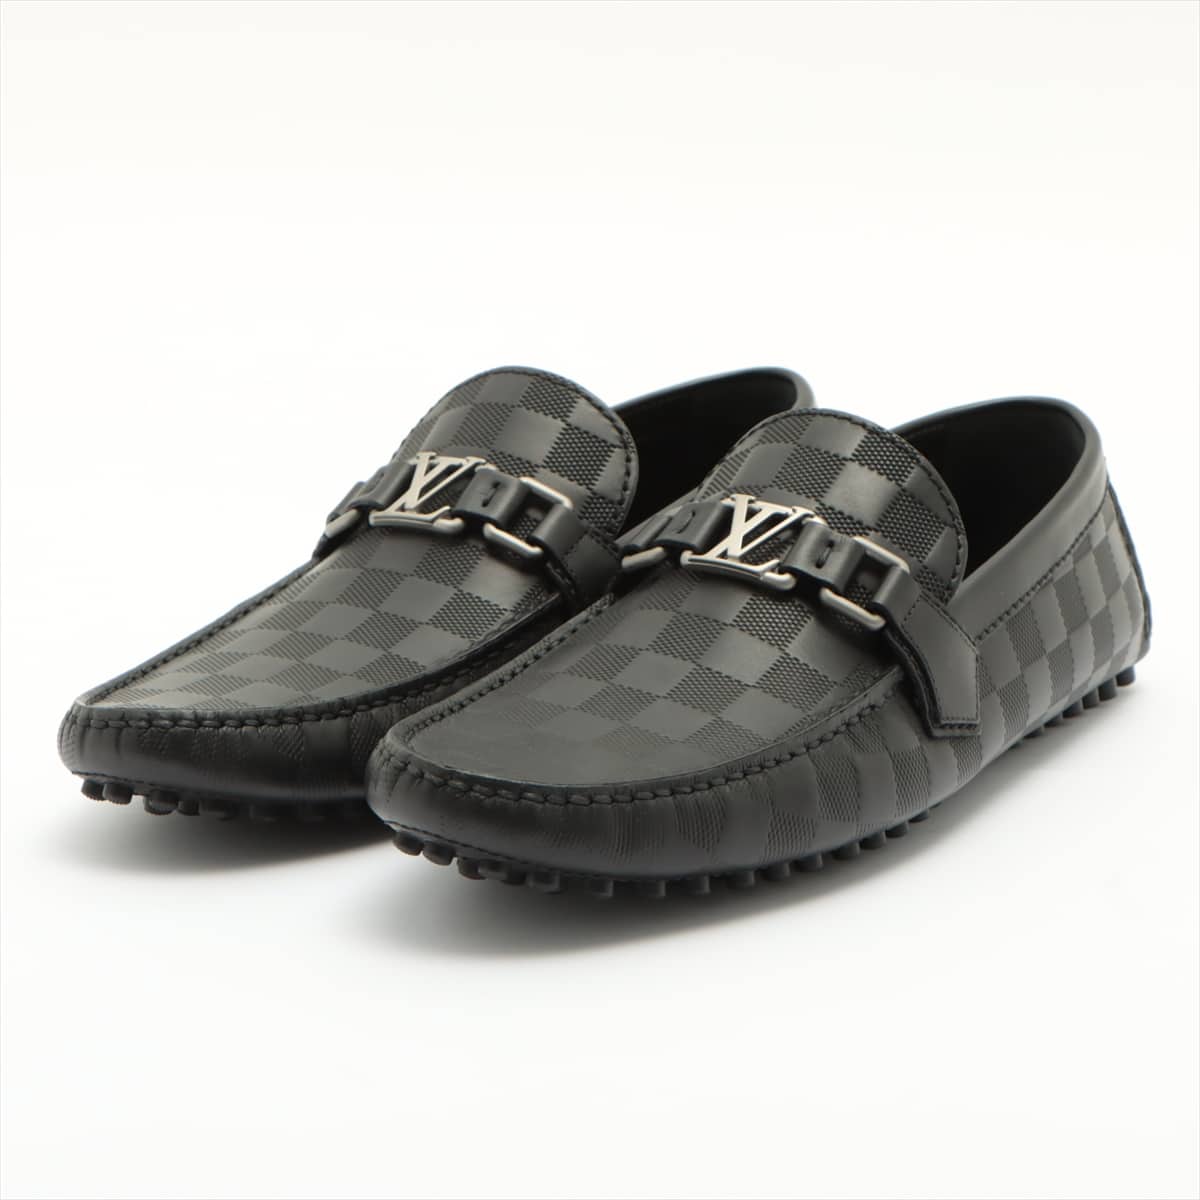 Louis Vuitton Hockenheim Line 18 years Leather Driving shoes 8 Men's Black ND0168 Damier